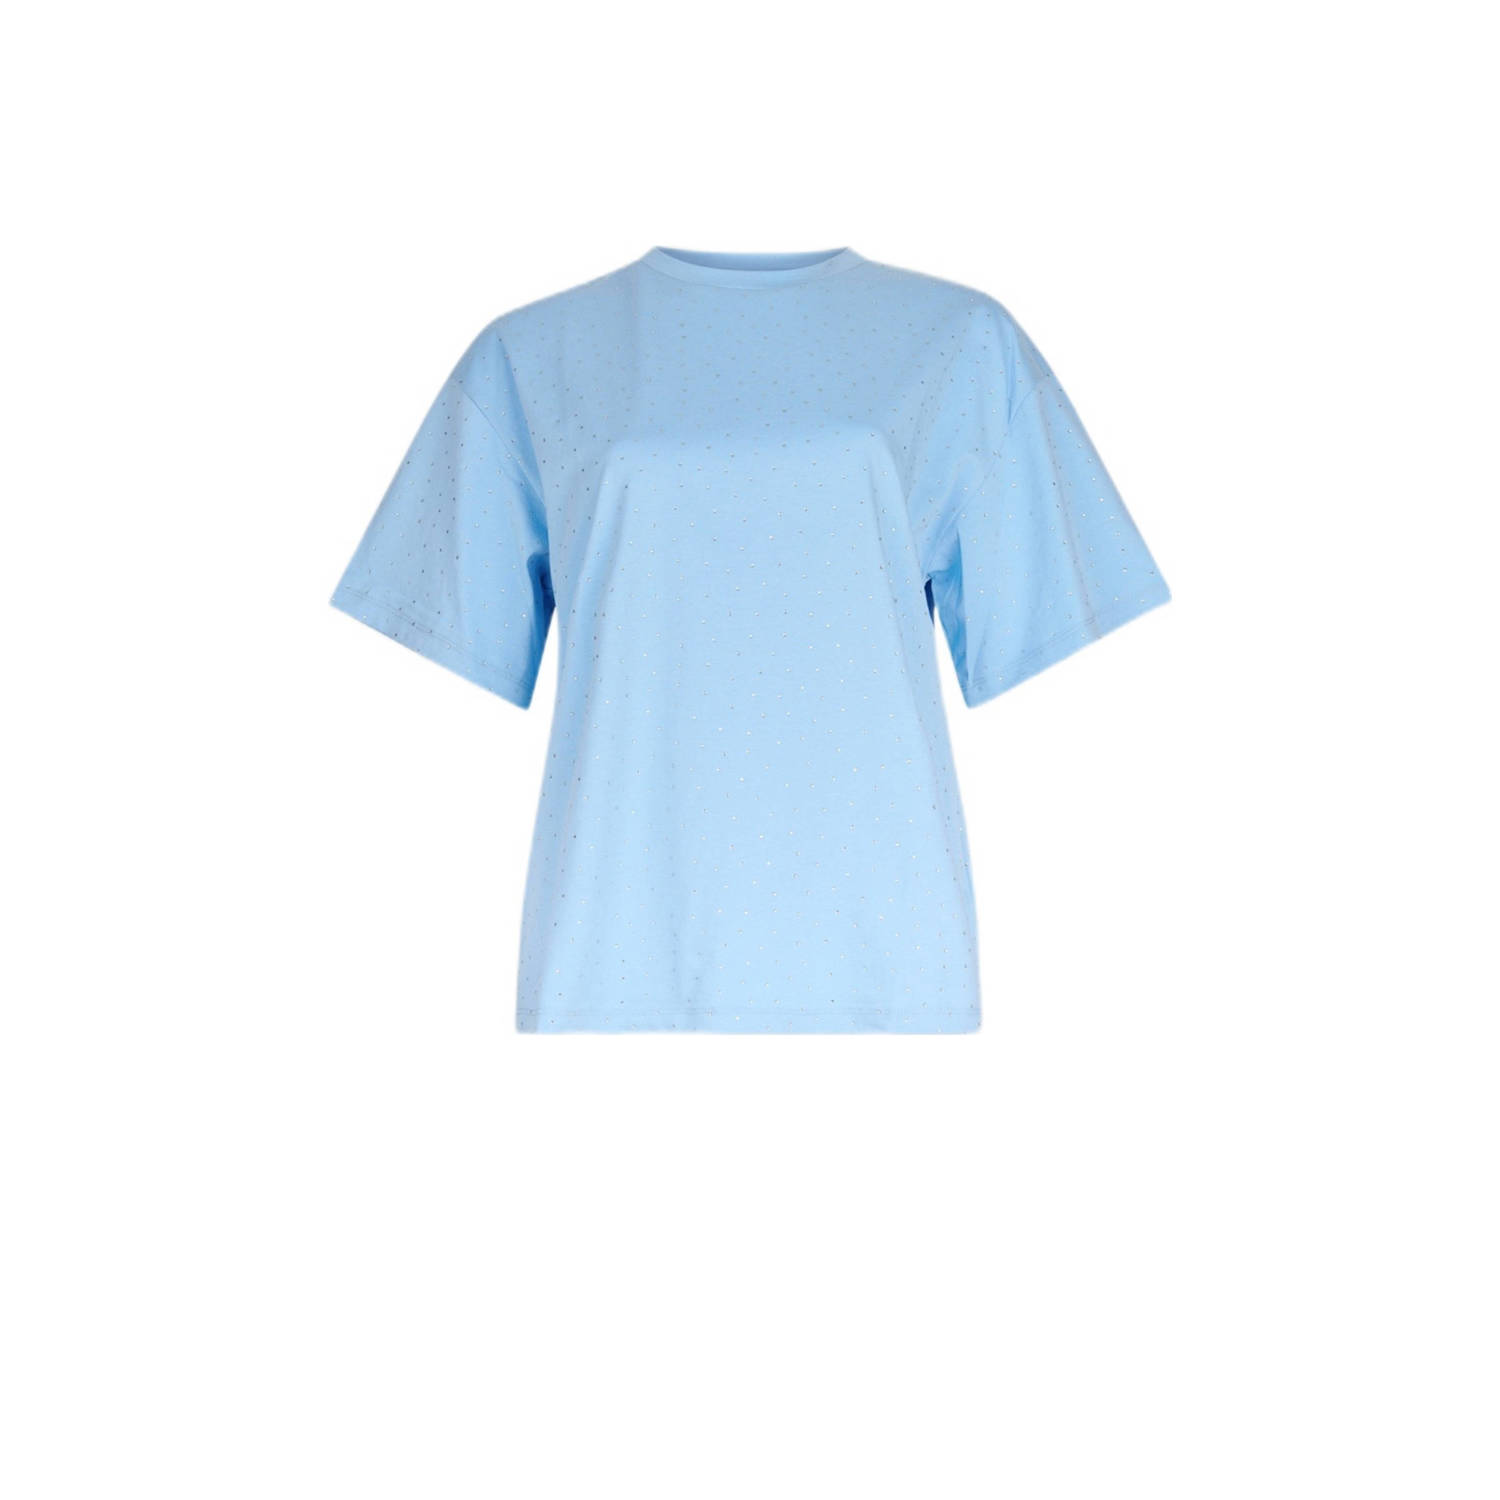 Shoeby T-shirt lichtblauw